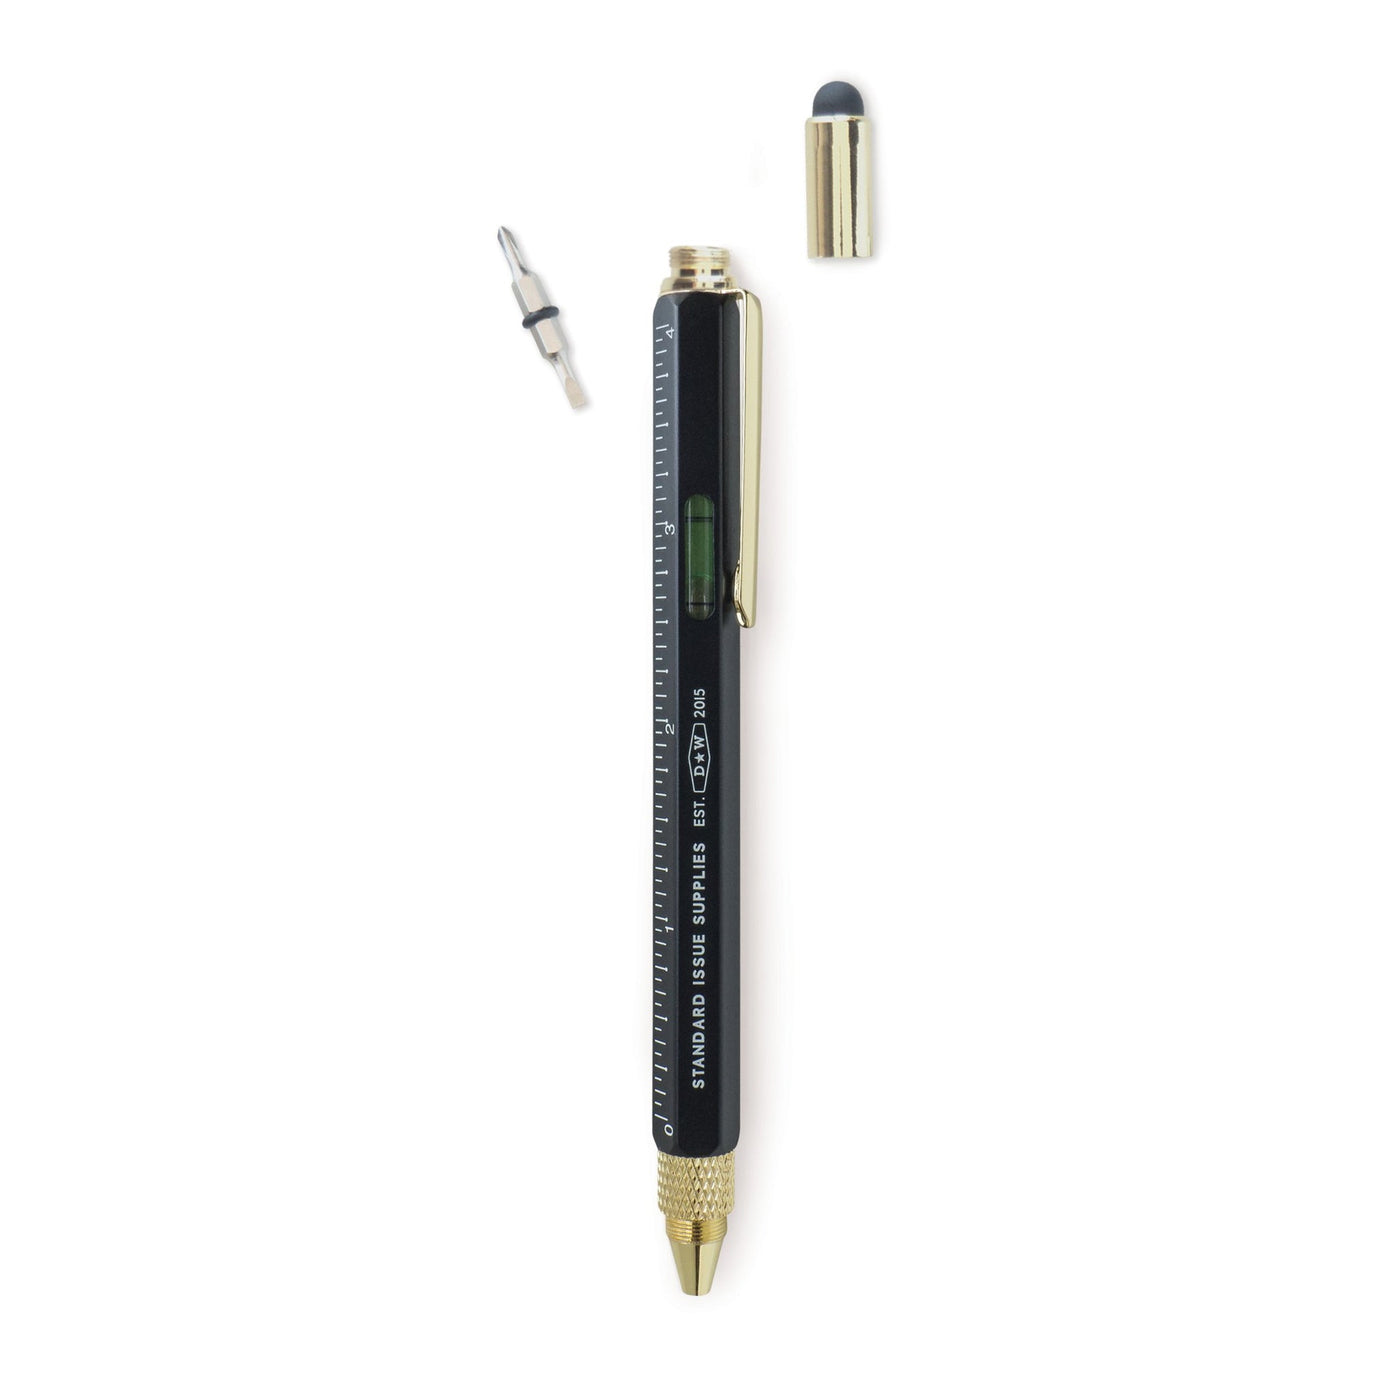 Standard Issue Multi-Tool Pen - Black